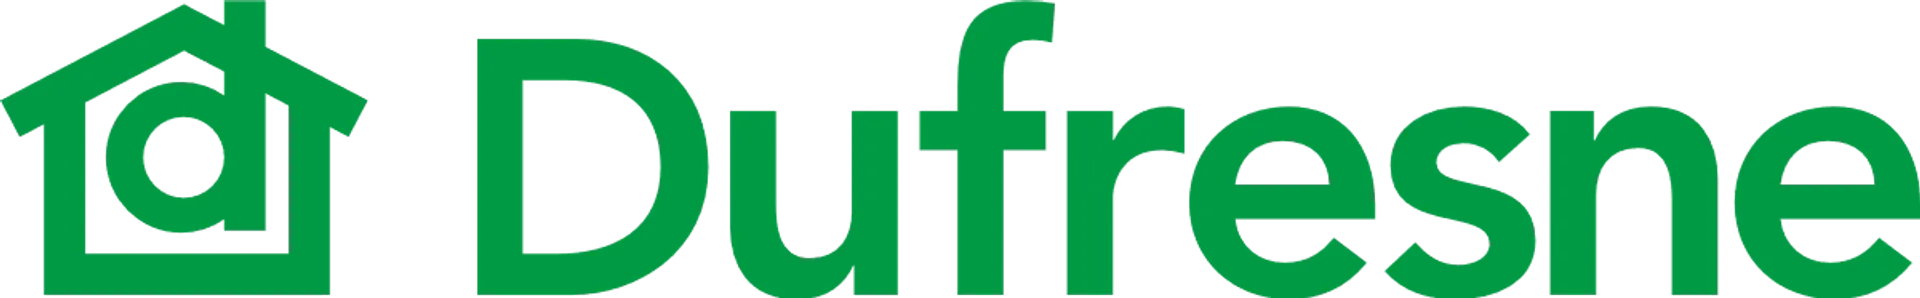 DUFRESNE logo